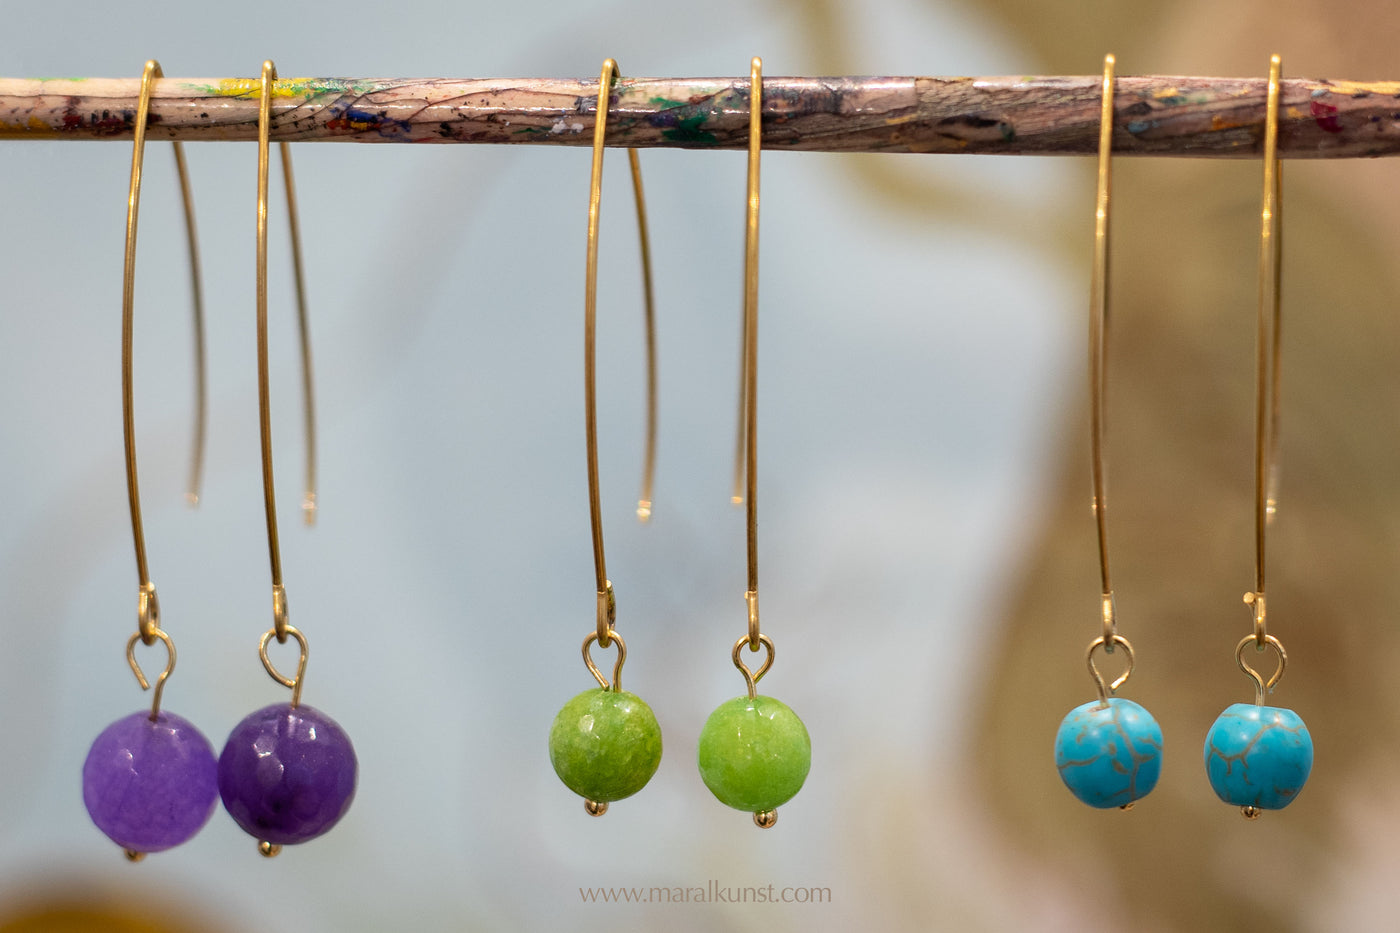 Maral design Turquoise  drop earrings